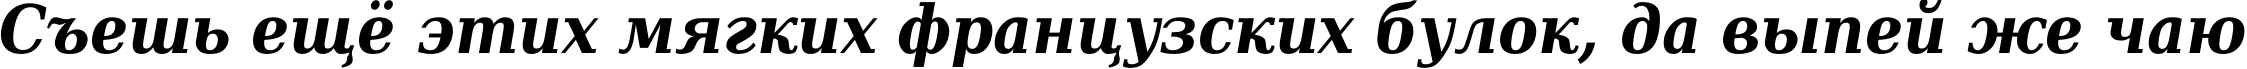 Пример написания шрифтом DejaVu Serif Condensed Bold Italic текста на русском